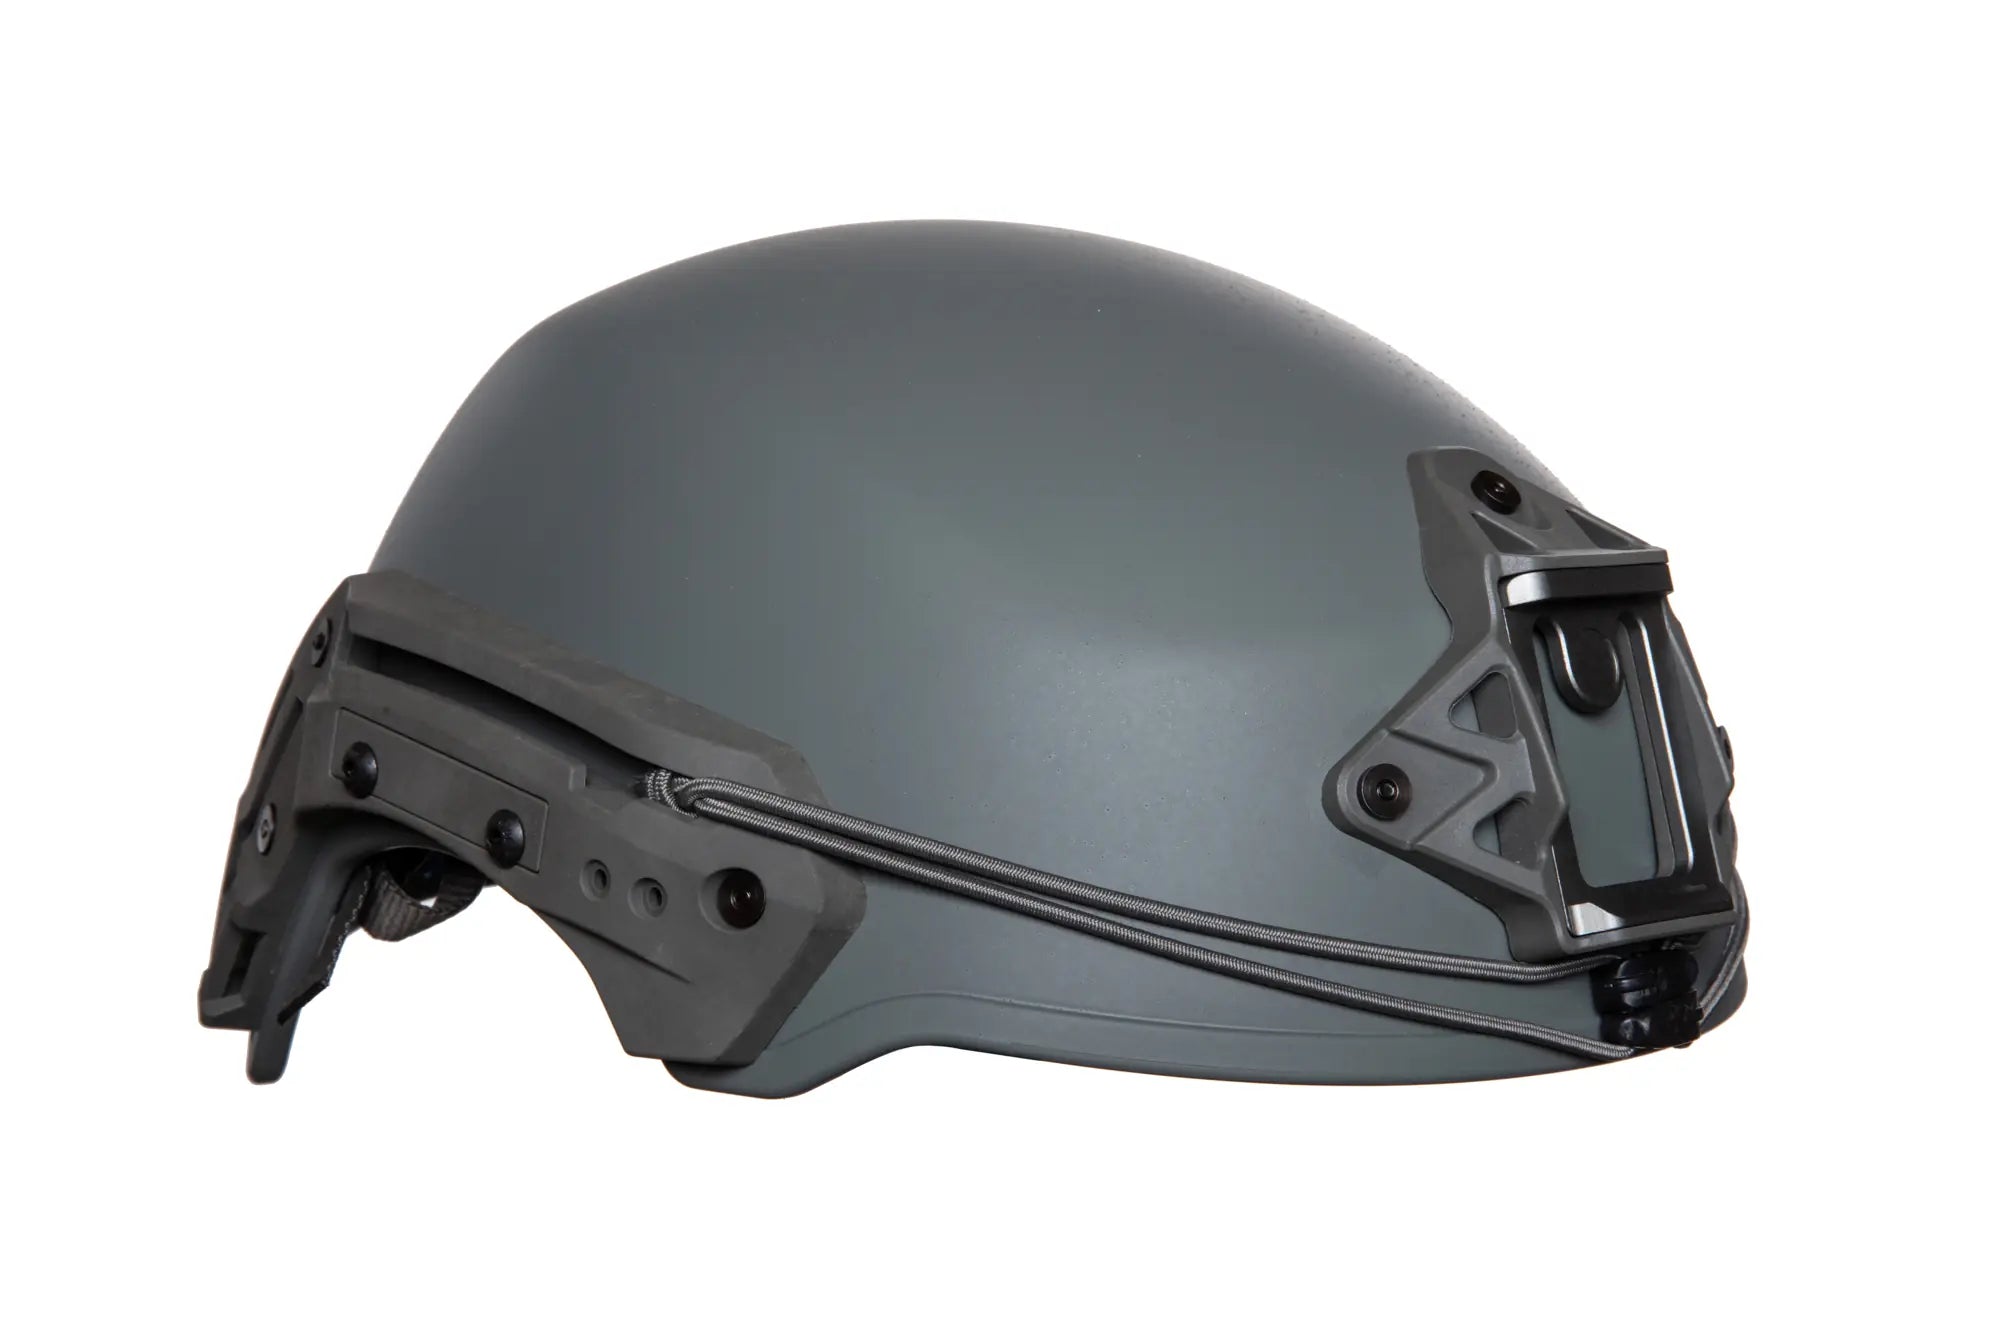 Replica of EX Ballistic helmet